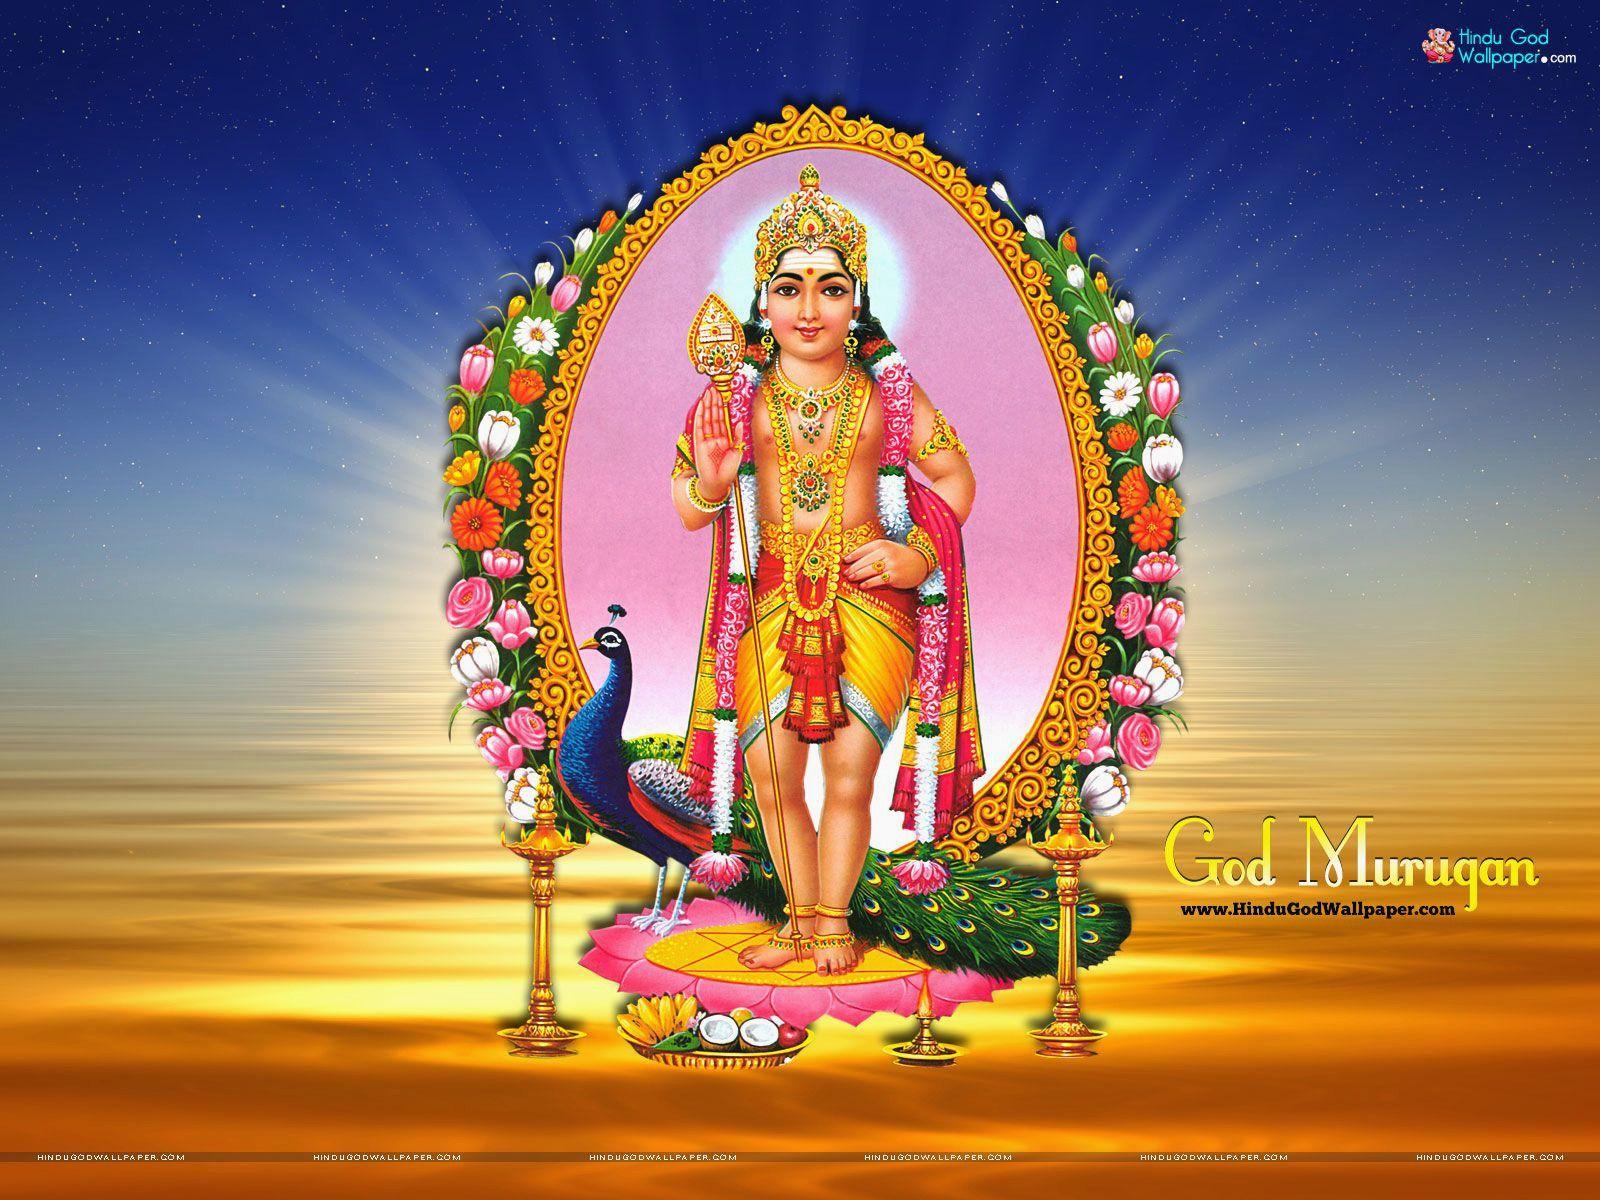 3D Wallpaper HD 1080p Free Download God New Tamil God Murugan